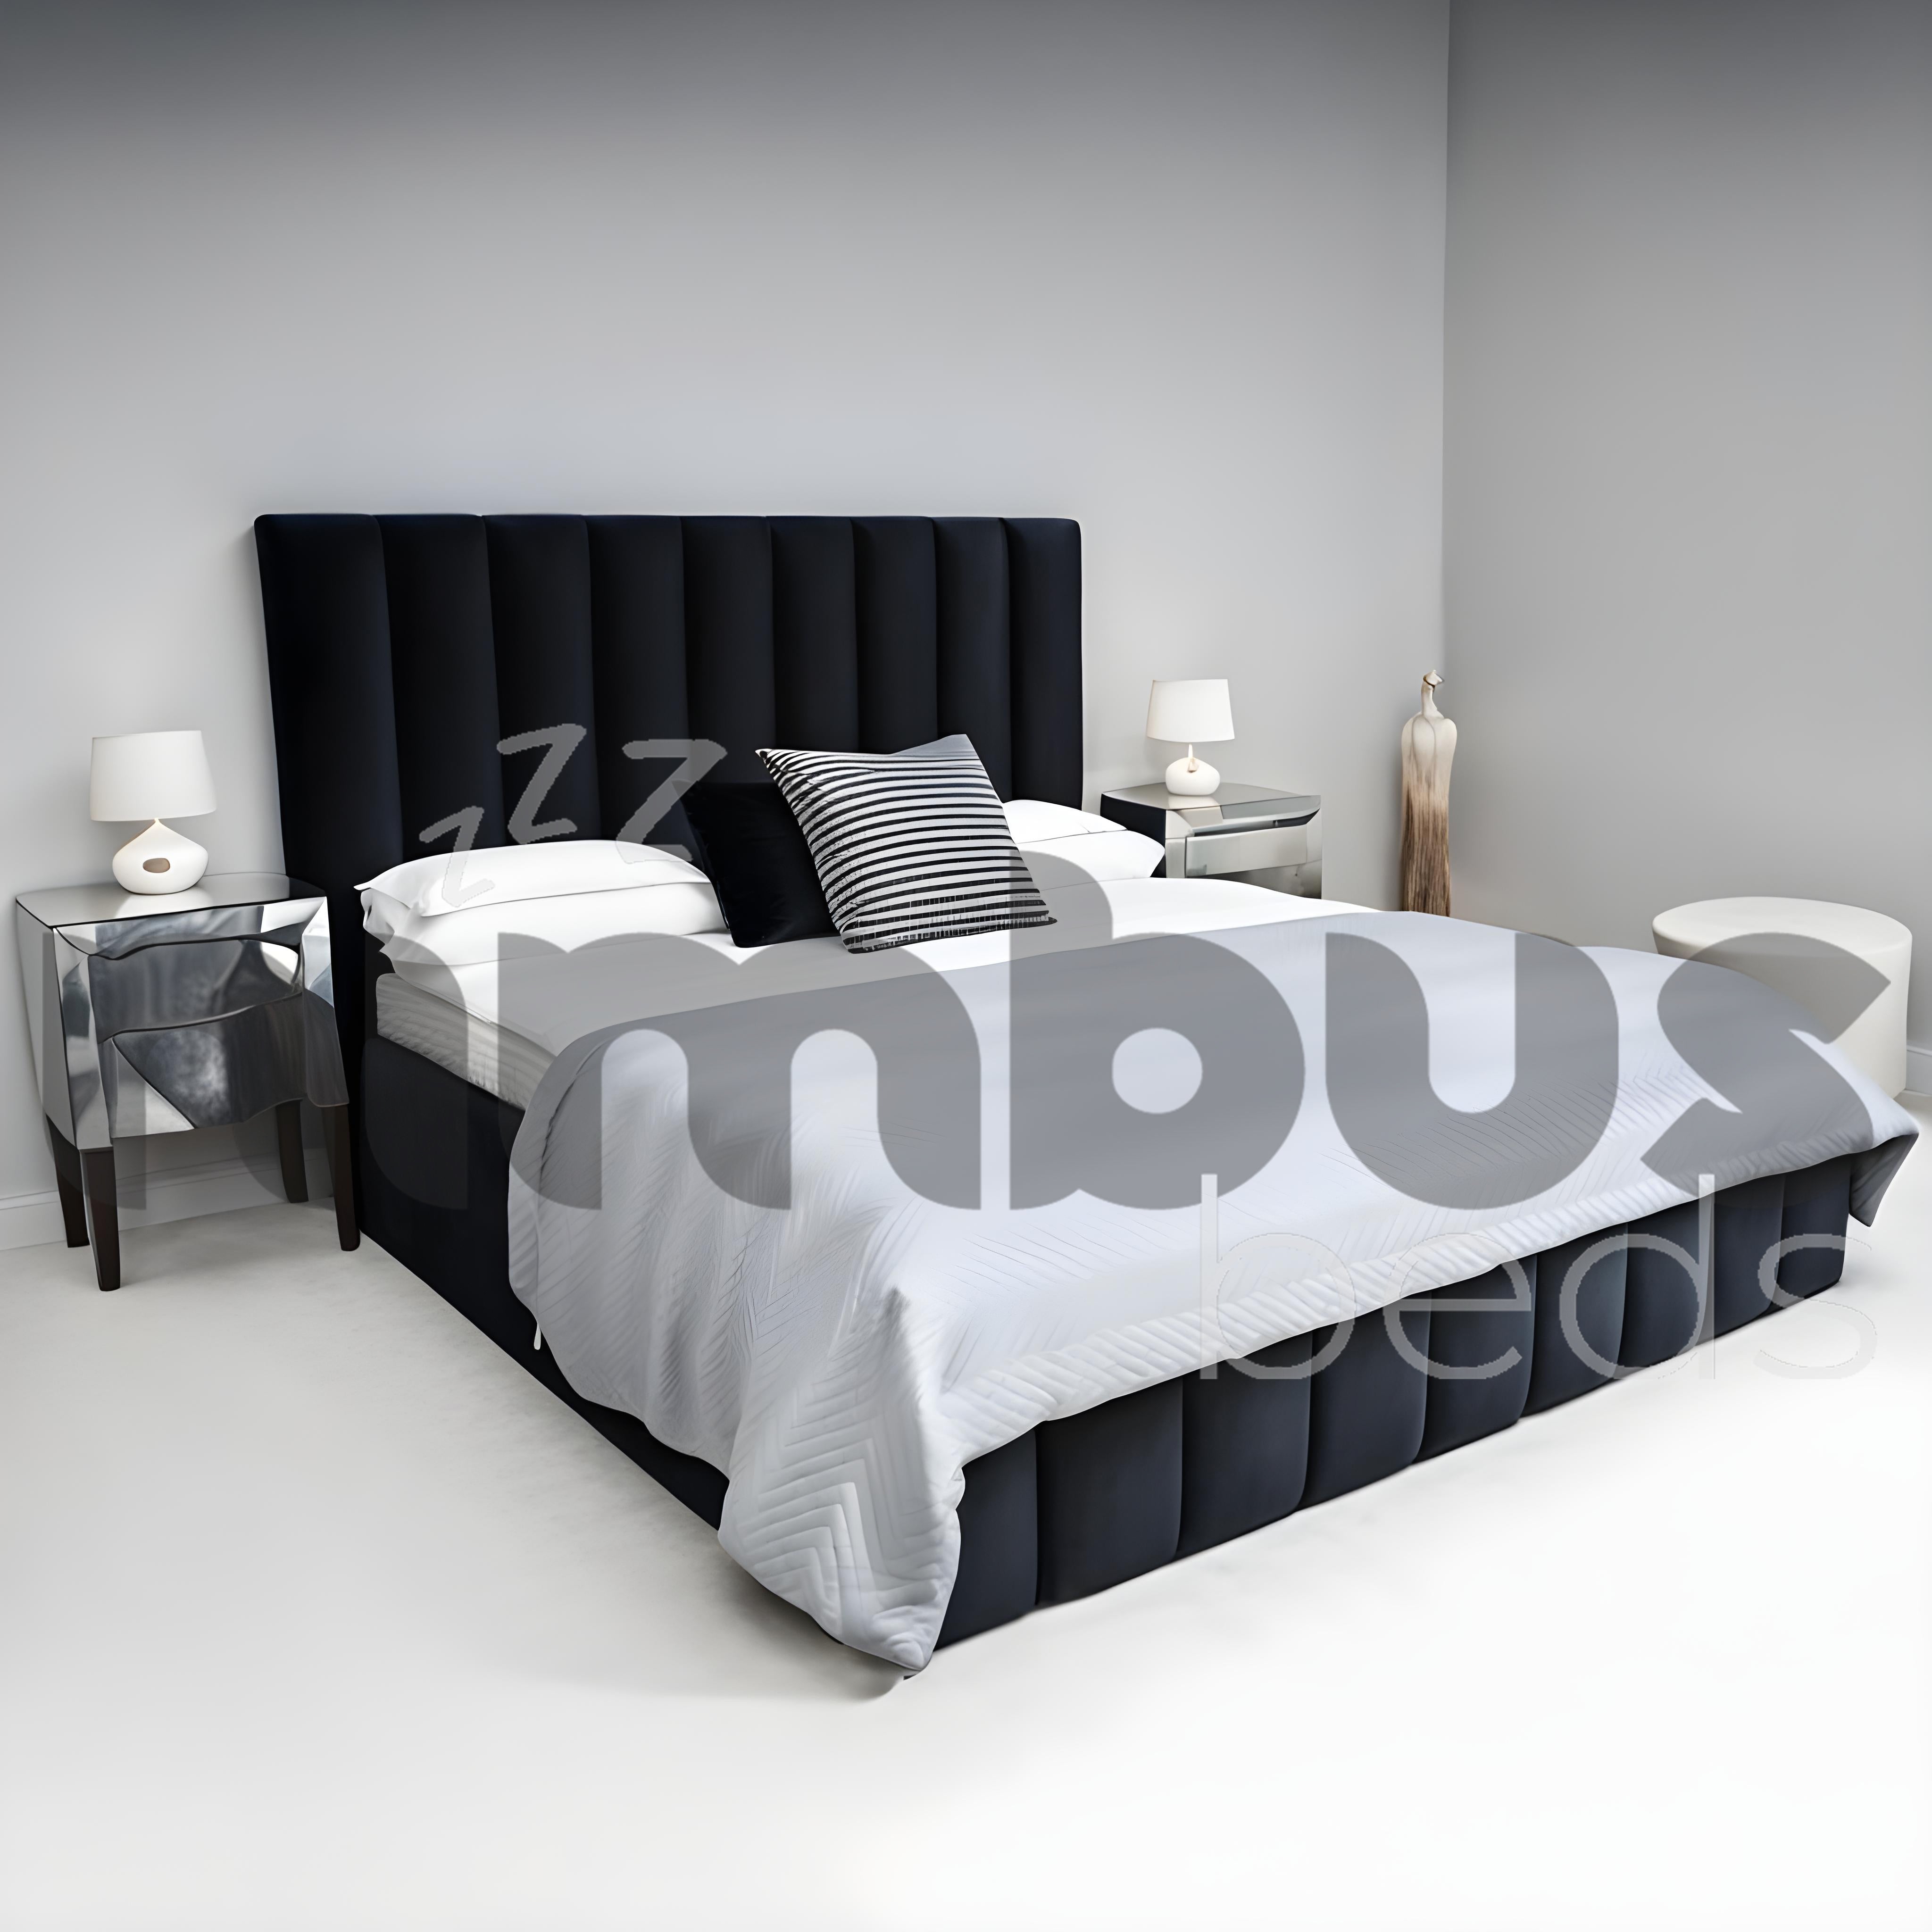 Louie bed frame - Nimbus Beds